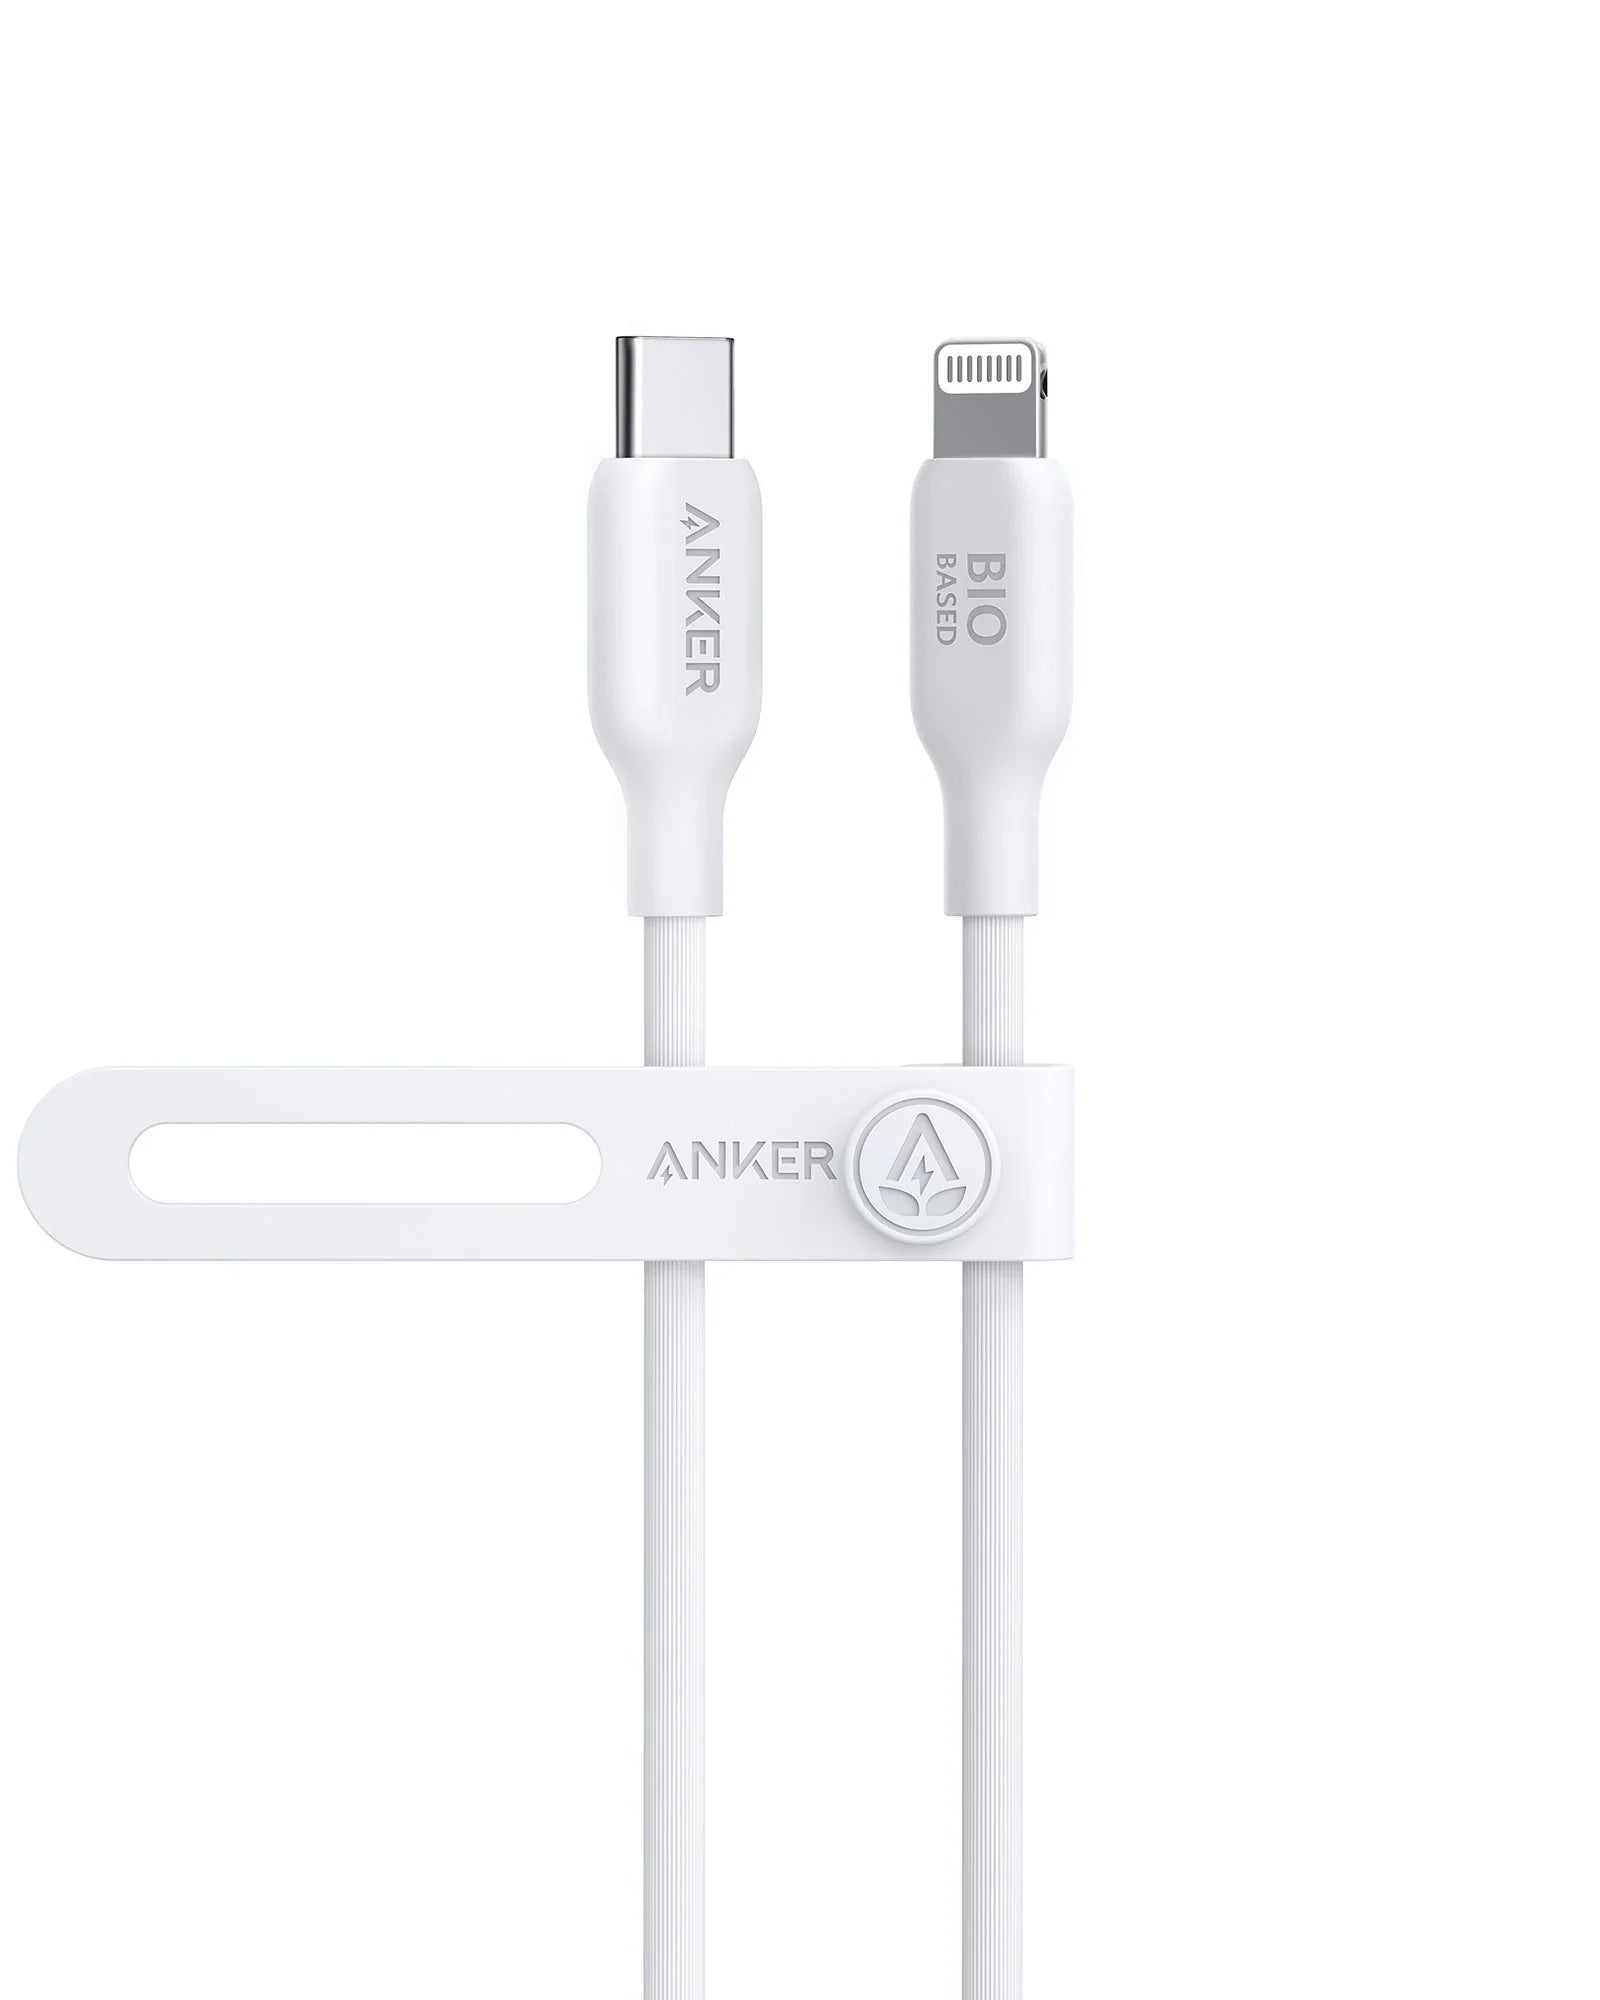 Anker 542 USB-C to Lightning Cable (Bio-Based 6ft) - White